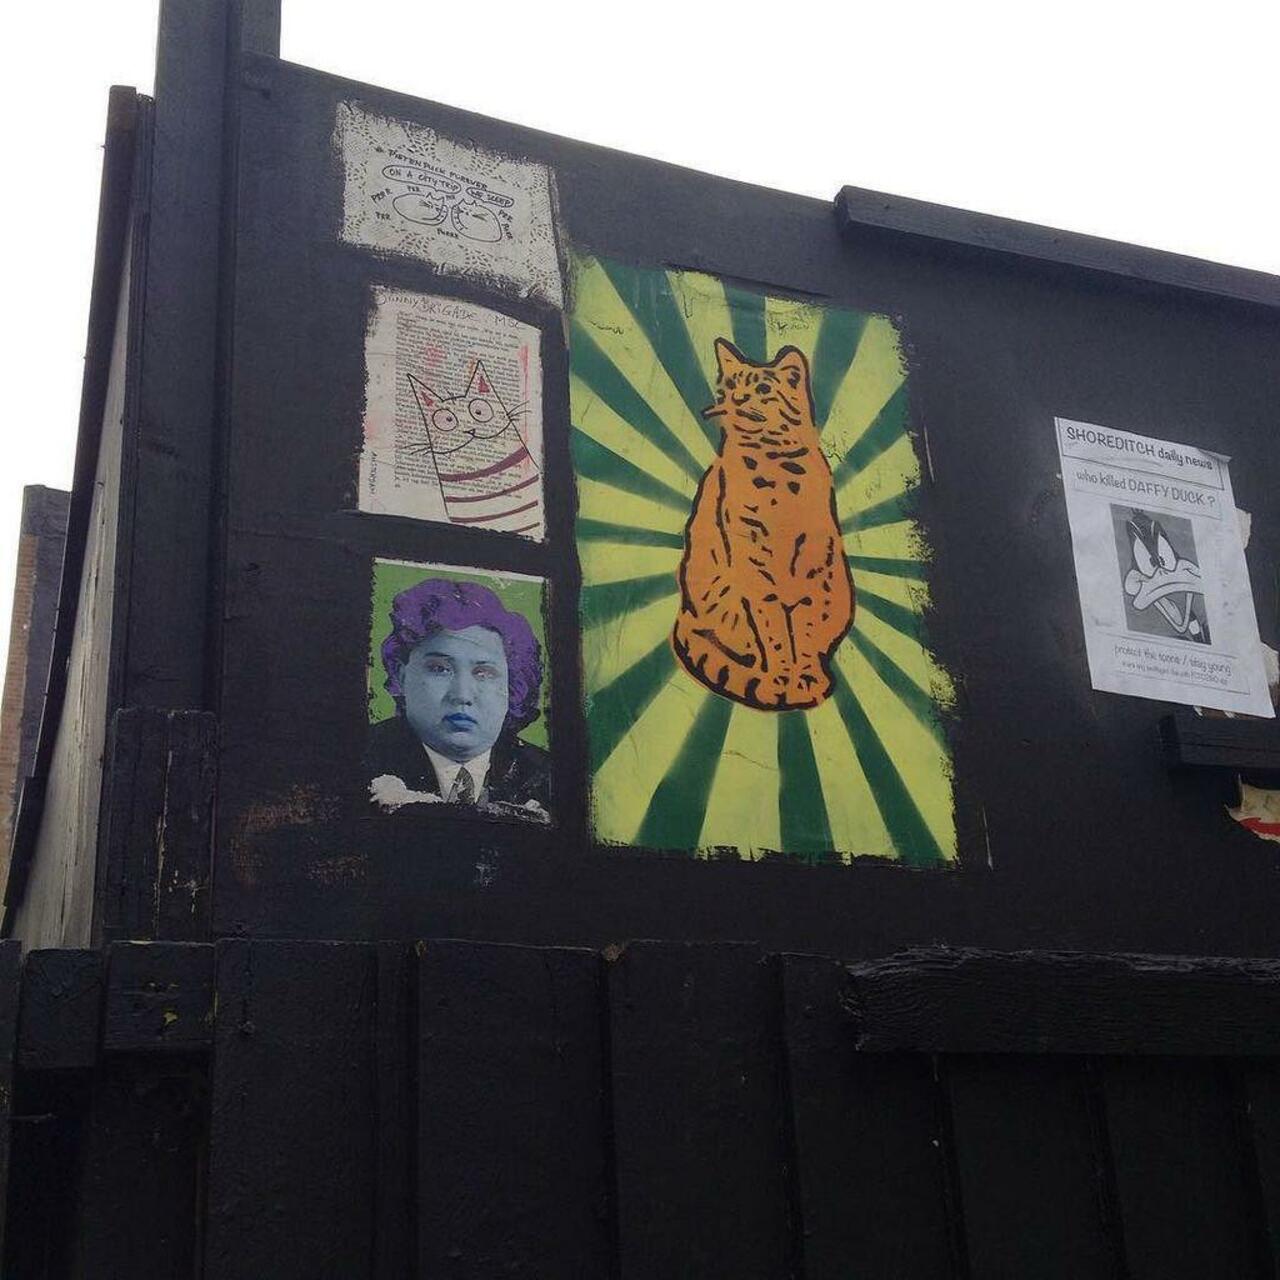 RT @StArtEverywhere: Puss. #streetart #streetartlondon #graffiti #london #thisislondon by isadarko http://t.co/NlXXF8rqnP